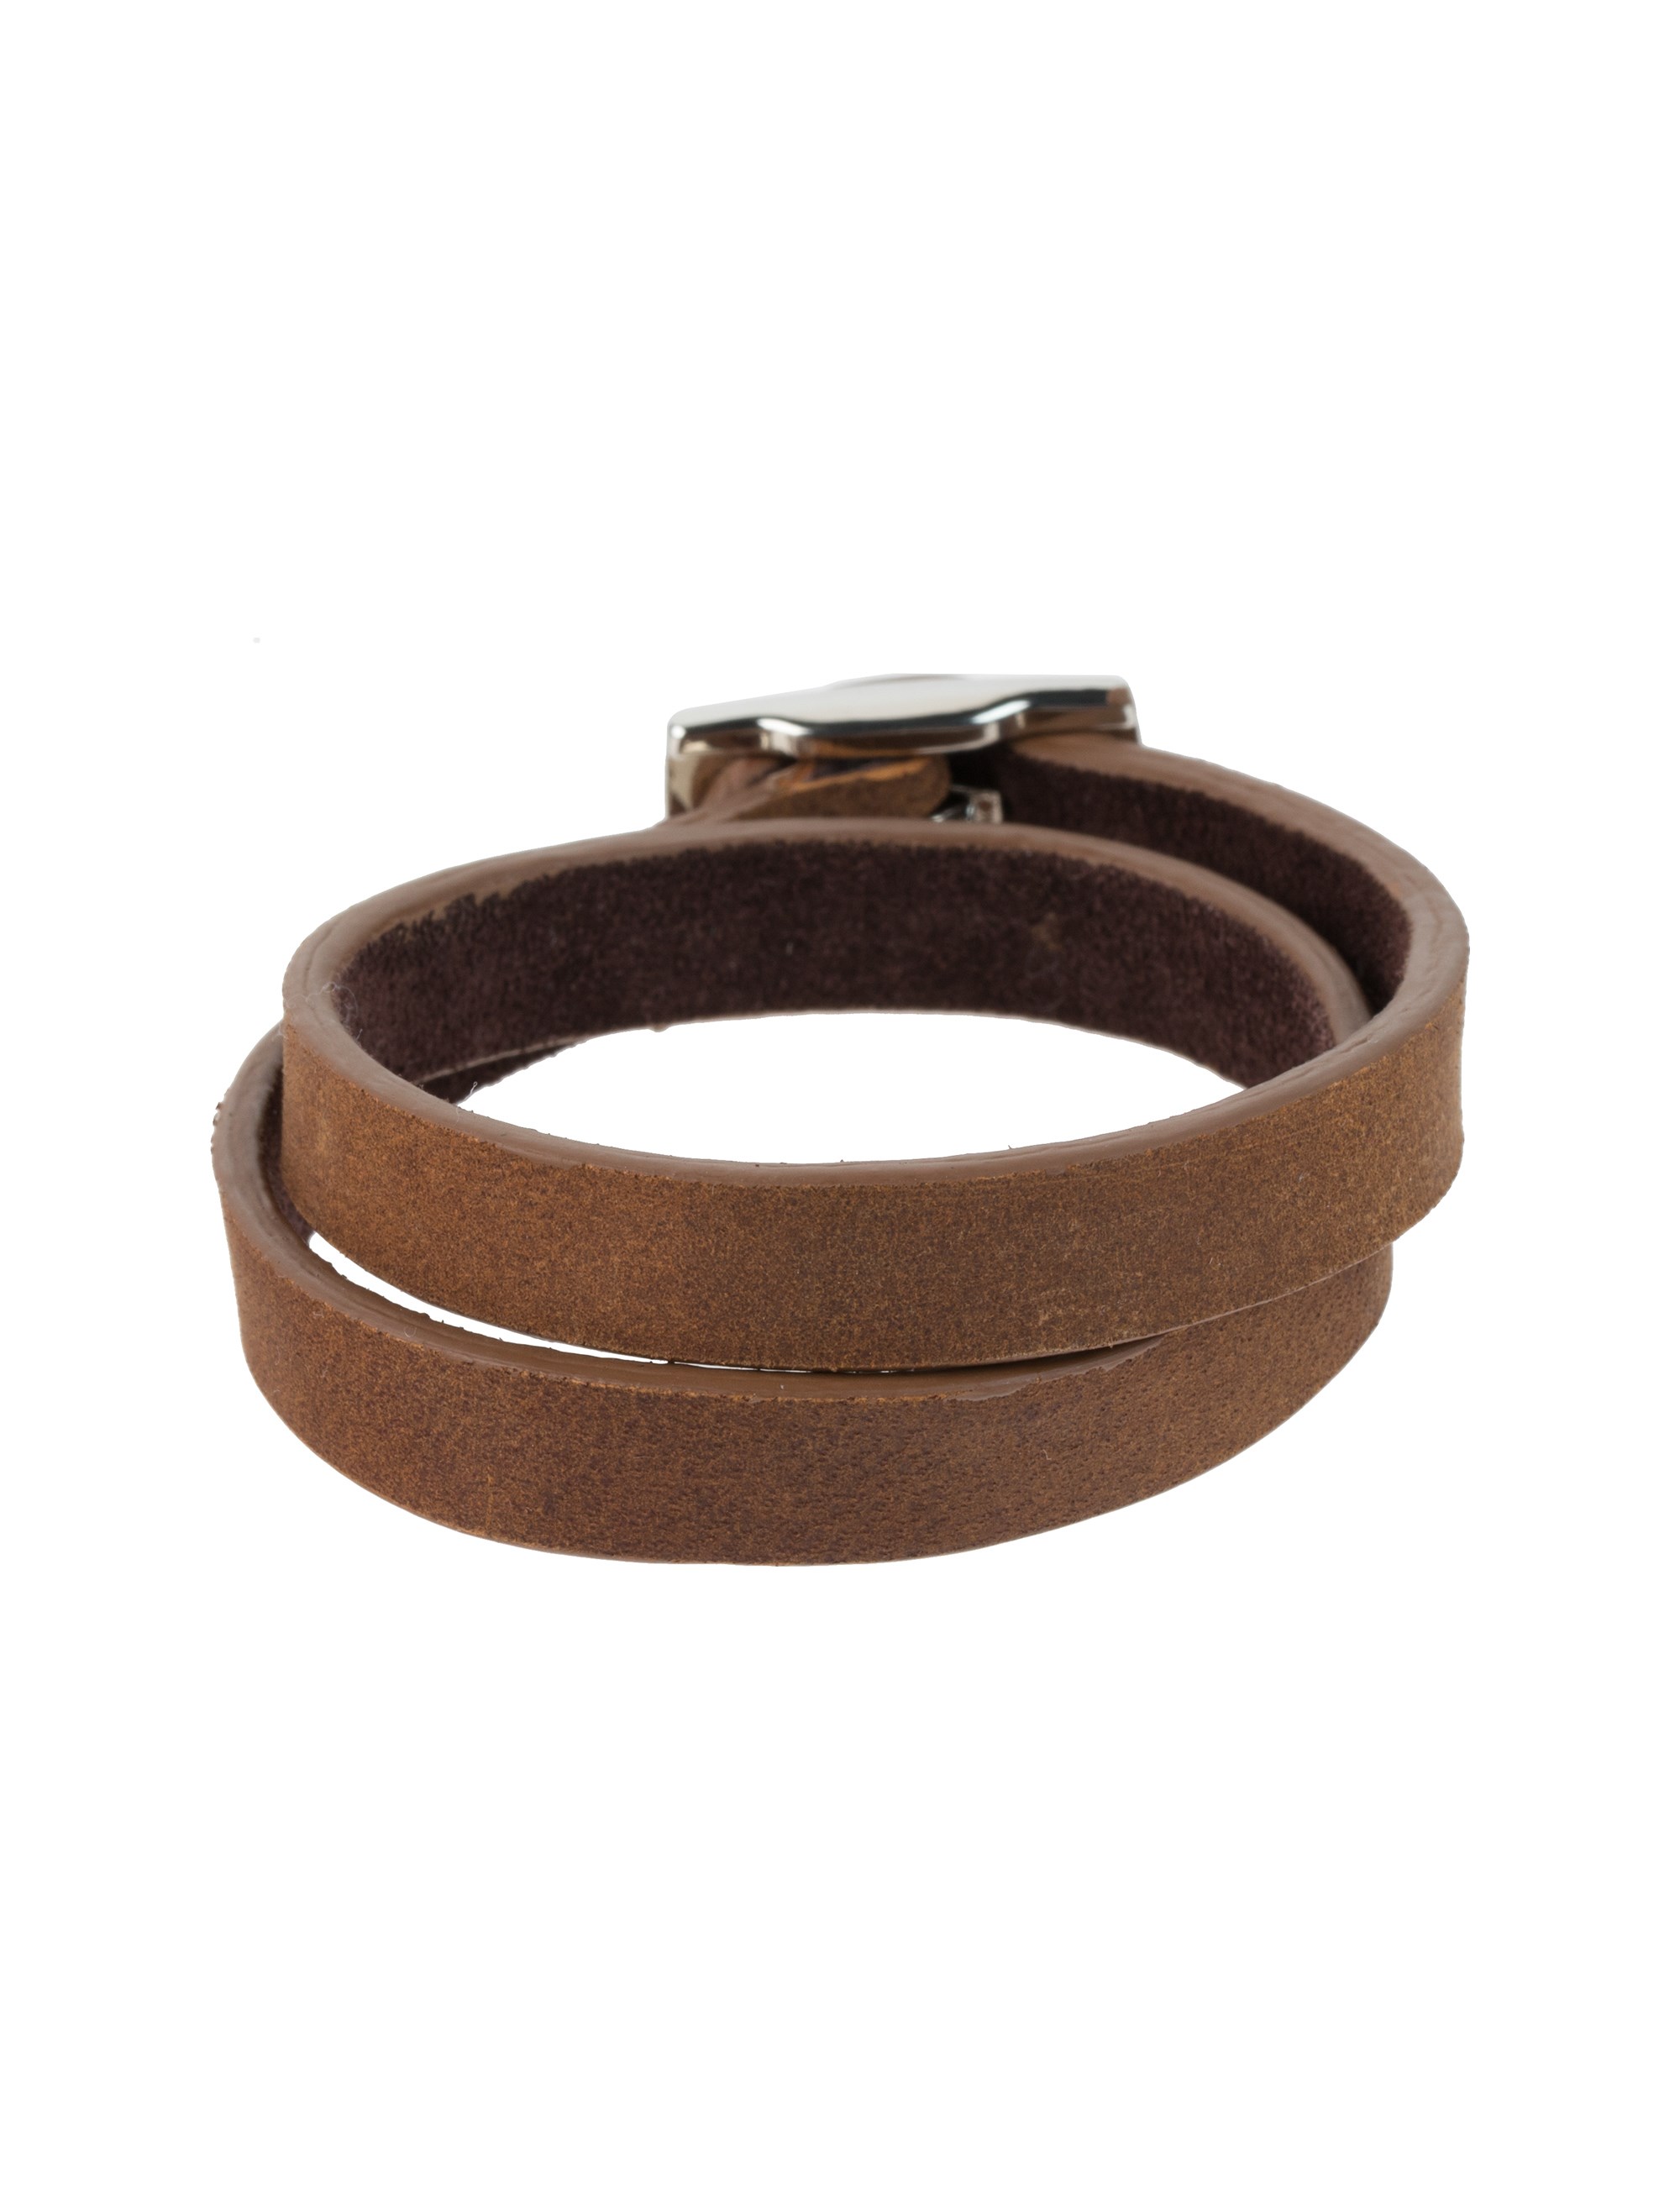 دستبند چرم مردانه - ماکو دیزاین سایز 44 cm